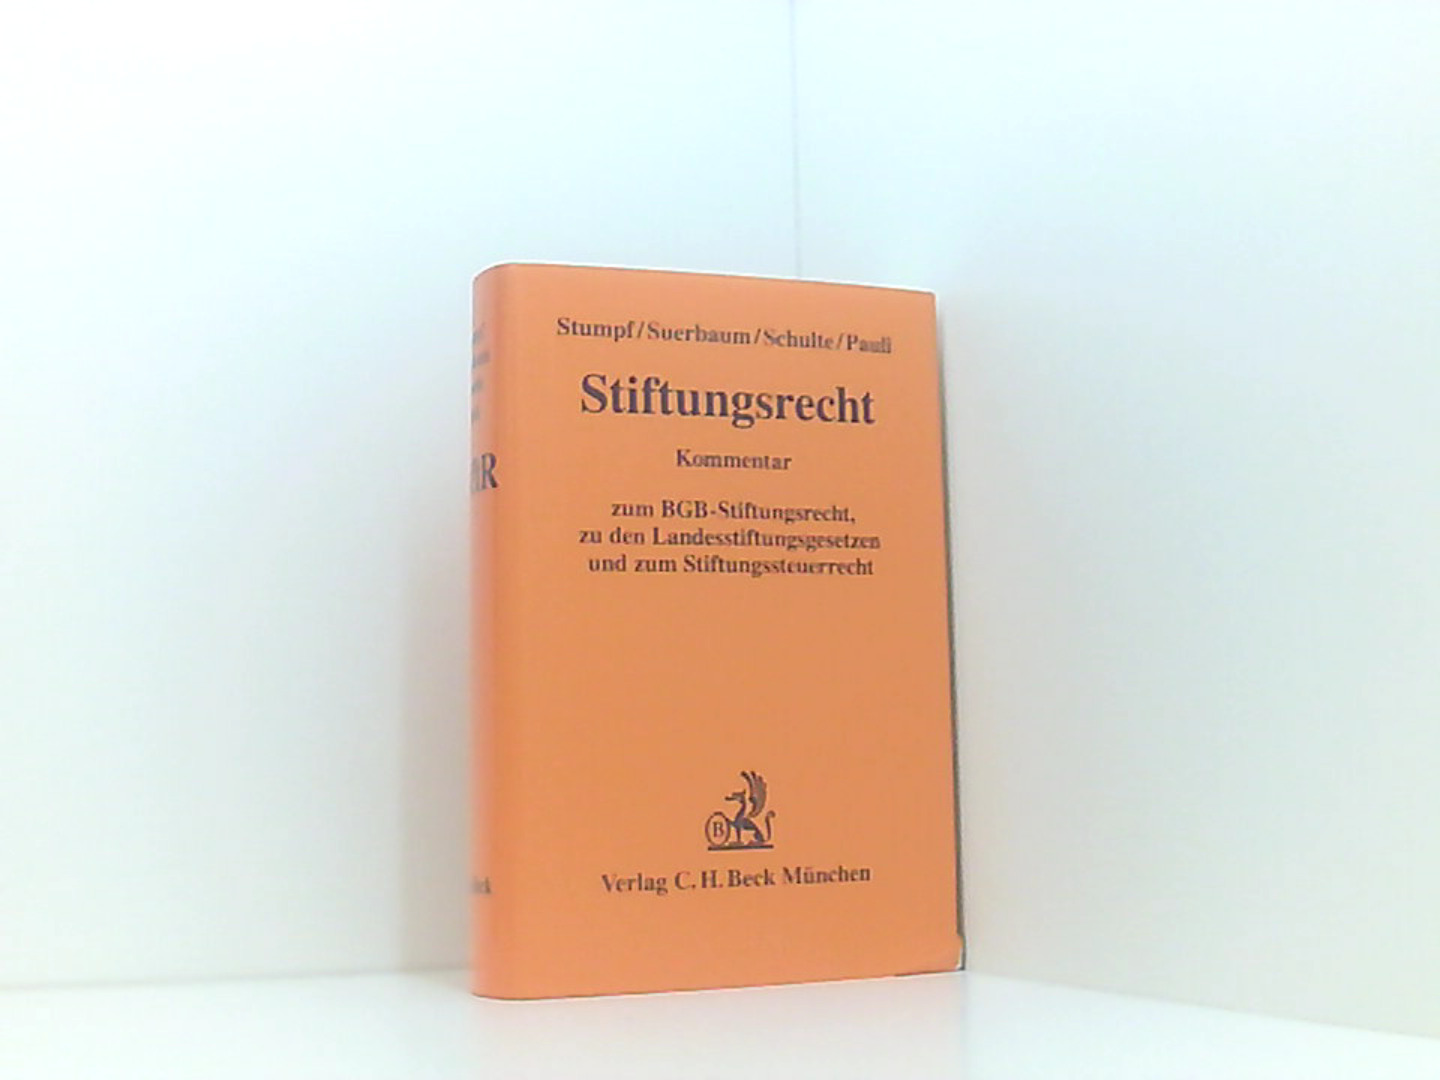 Stiftungsrecht (Gelbe Erläuterungsbücher) - Stumpf, Christoph, Joachim Suerbaum Martin Schulte u. a.